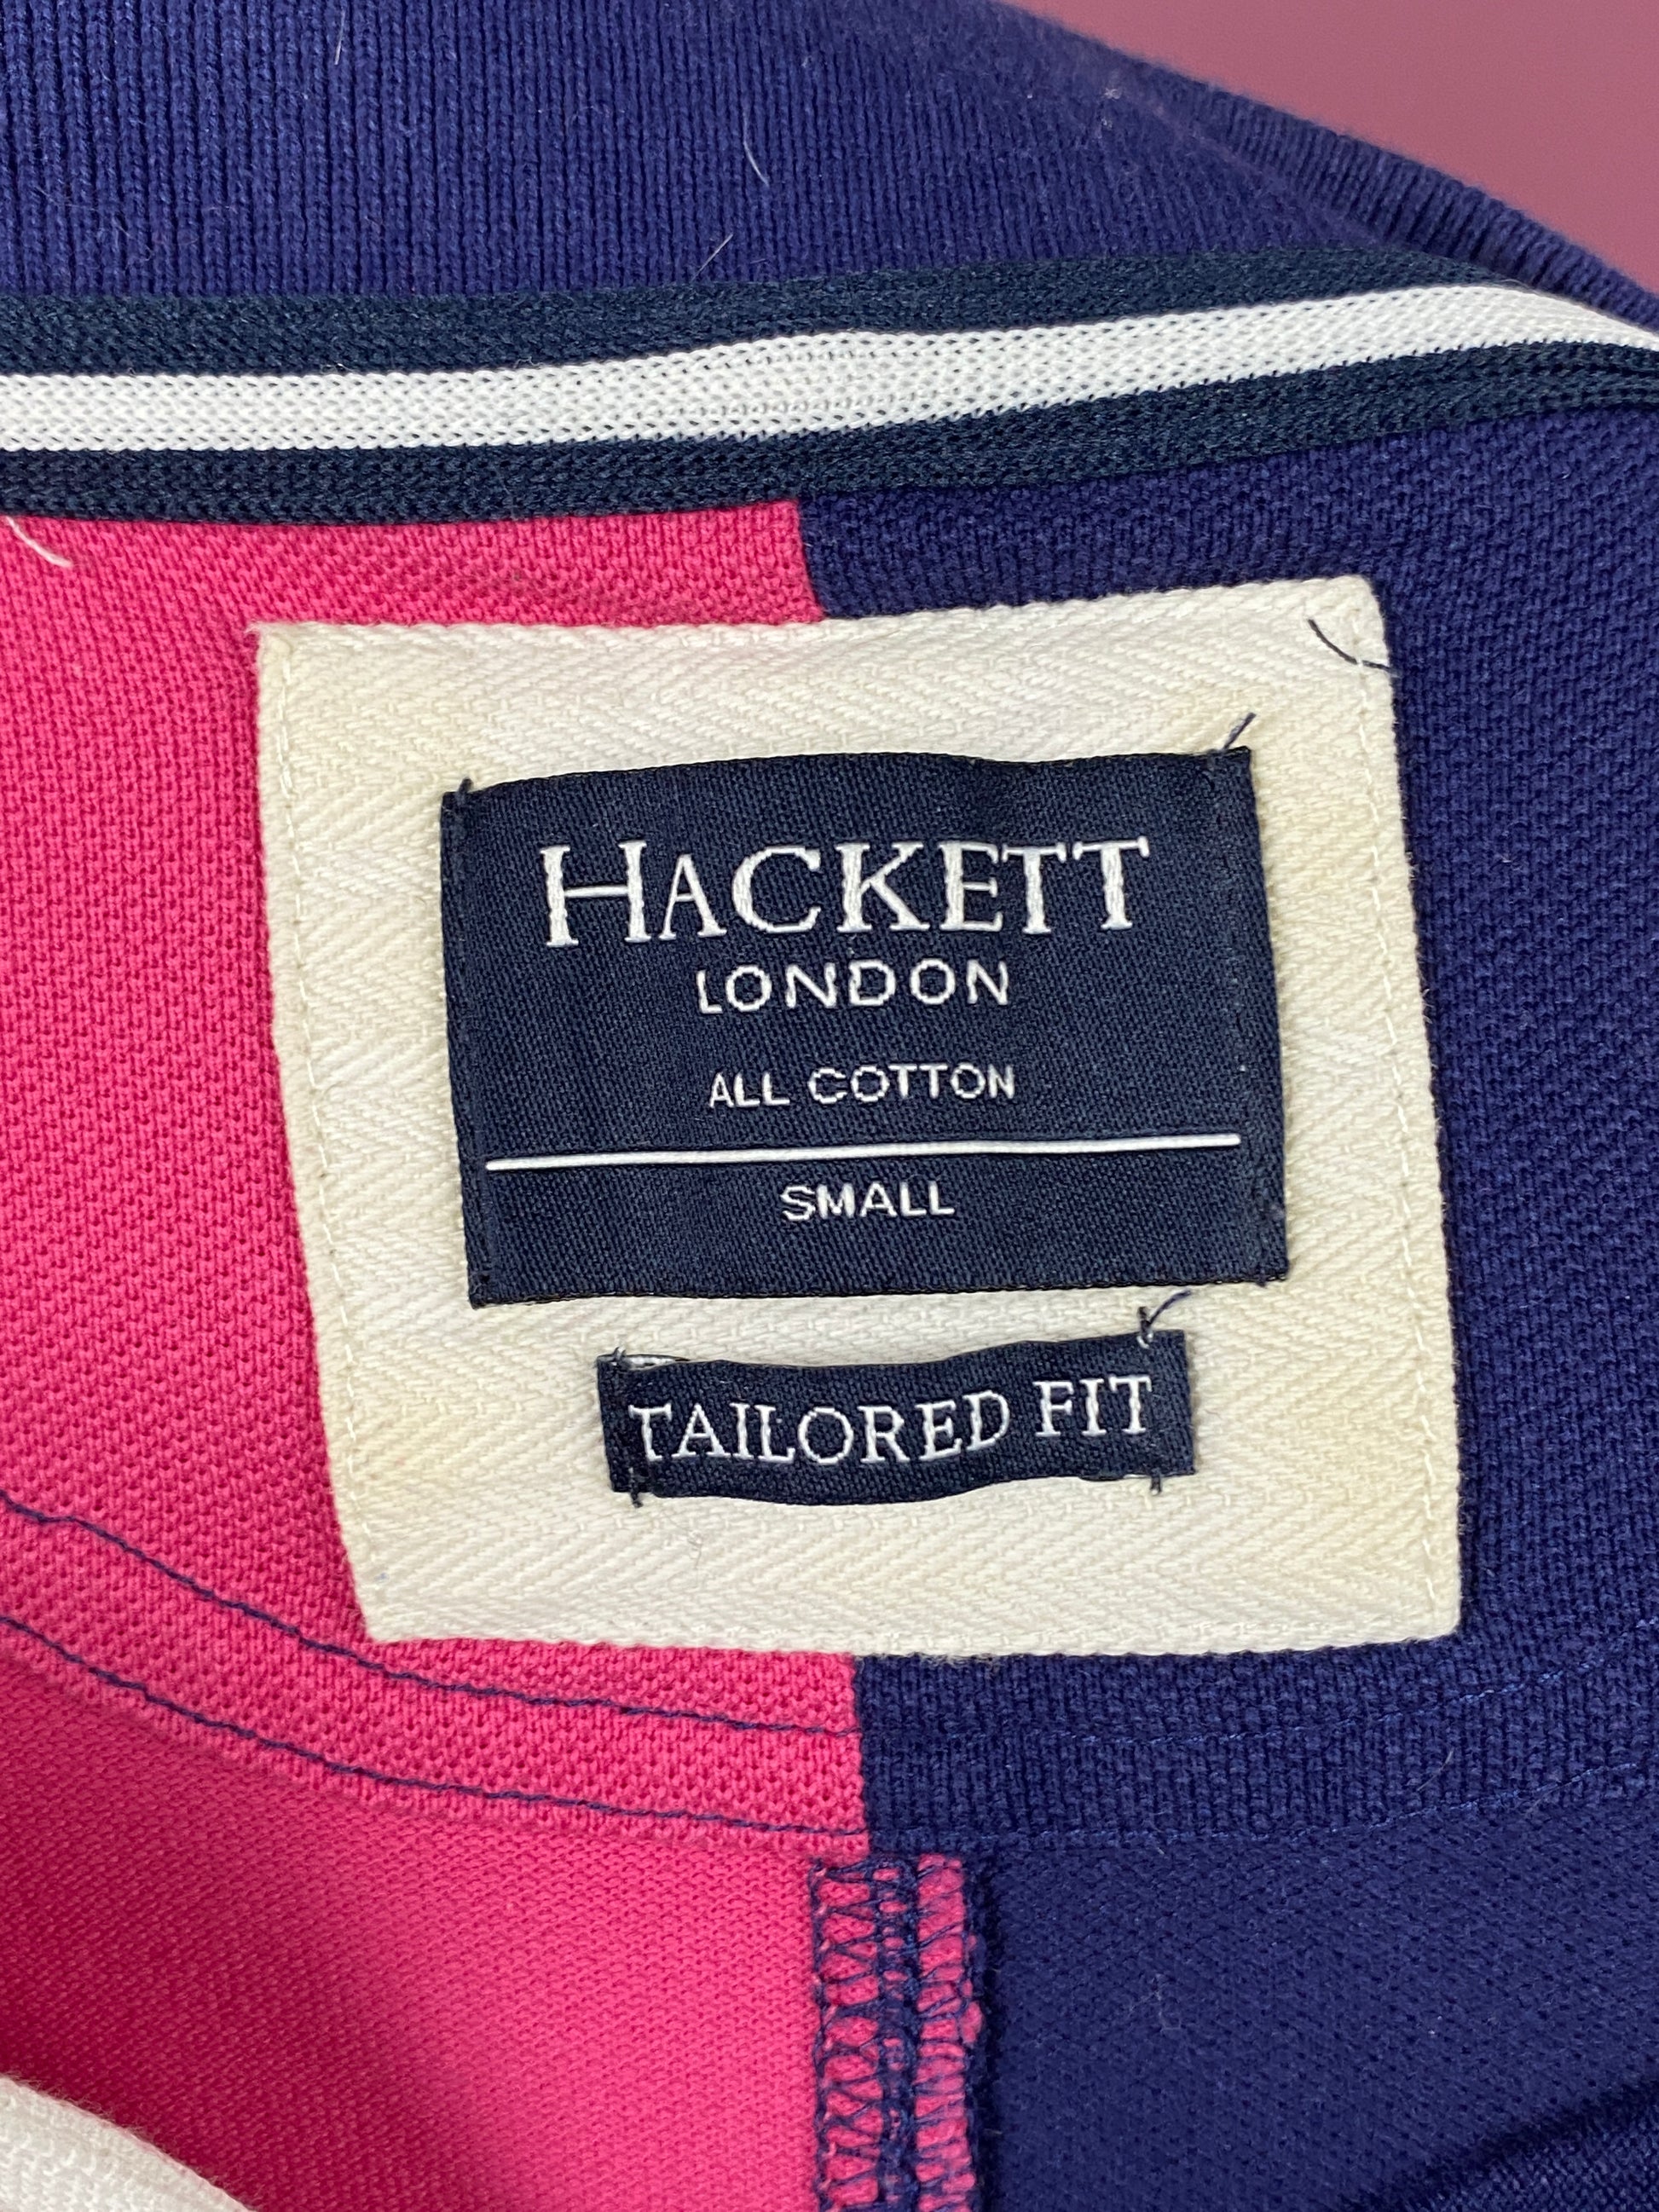 Hackett Vintage Men's Polo Shirt - Small Navy Blue & Pink Cotton